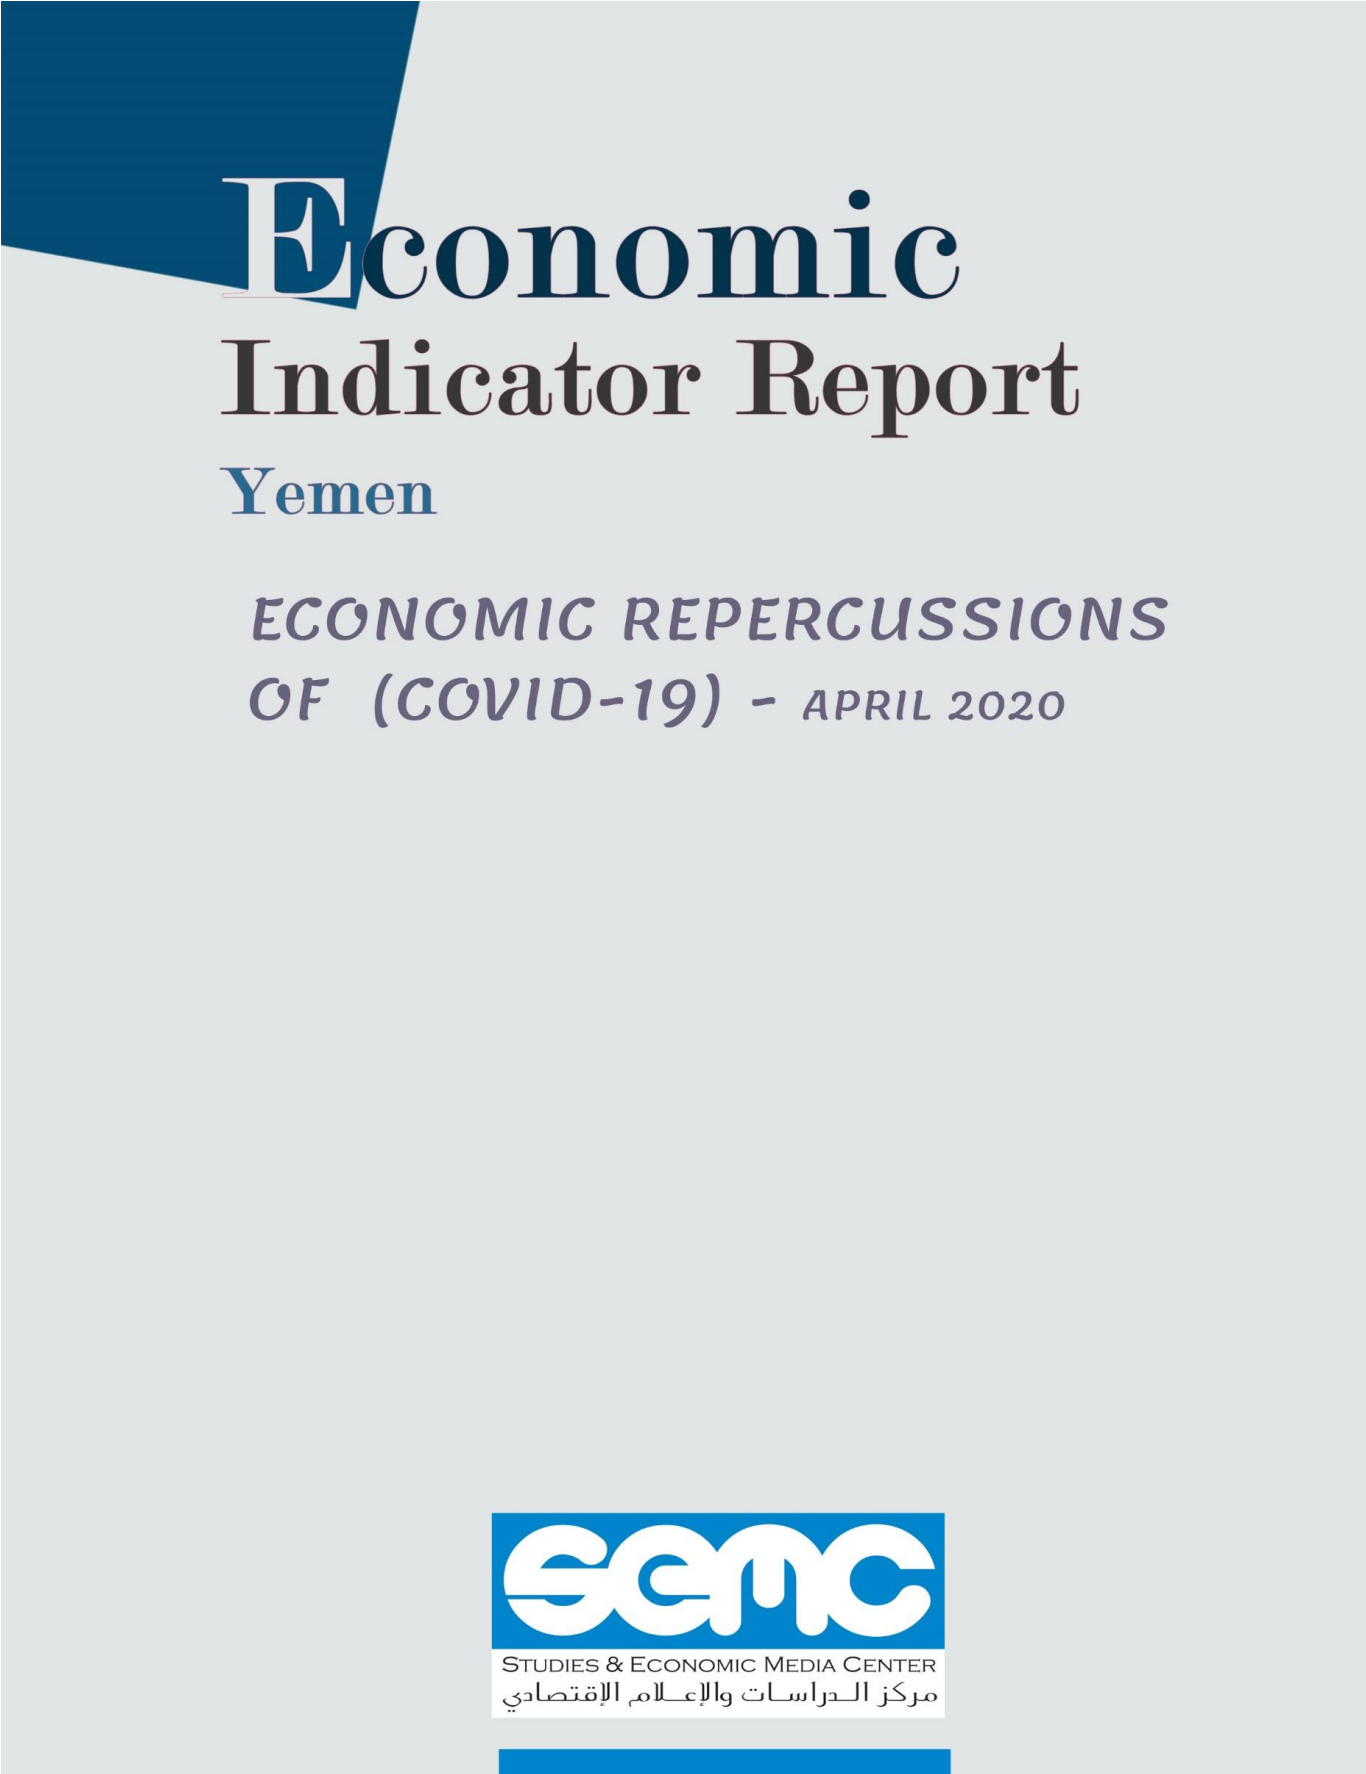 SEMC issued the Yemen Economic Indicator Report for April 2020